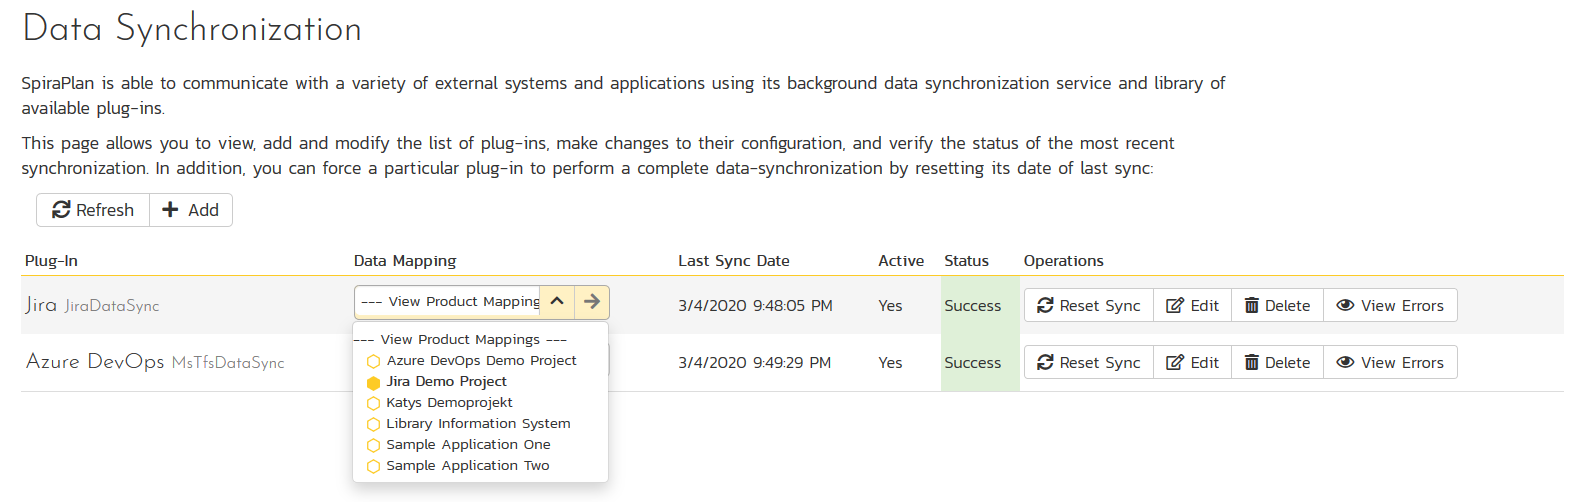 SpiraTest data synchronization service with Jira and Azure DevOps plugins active